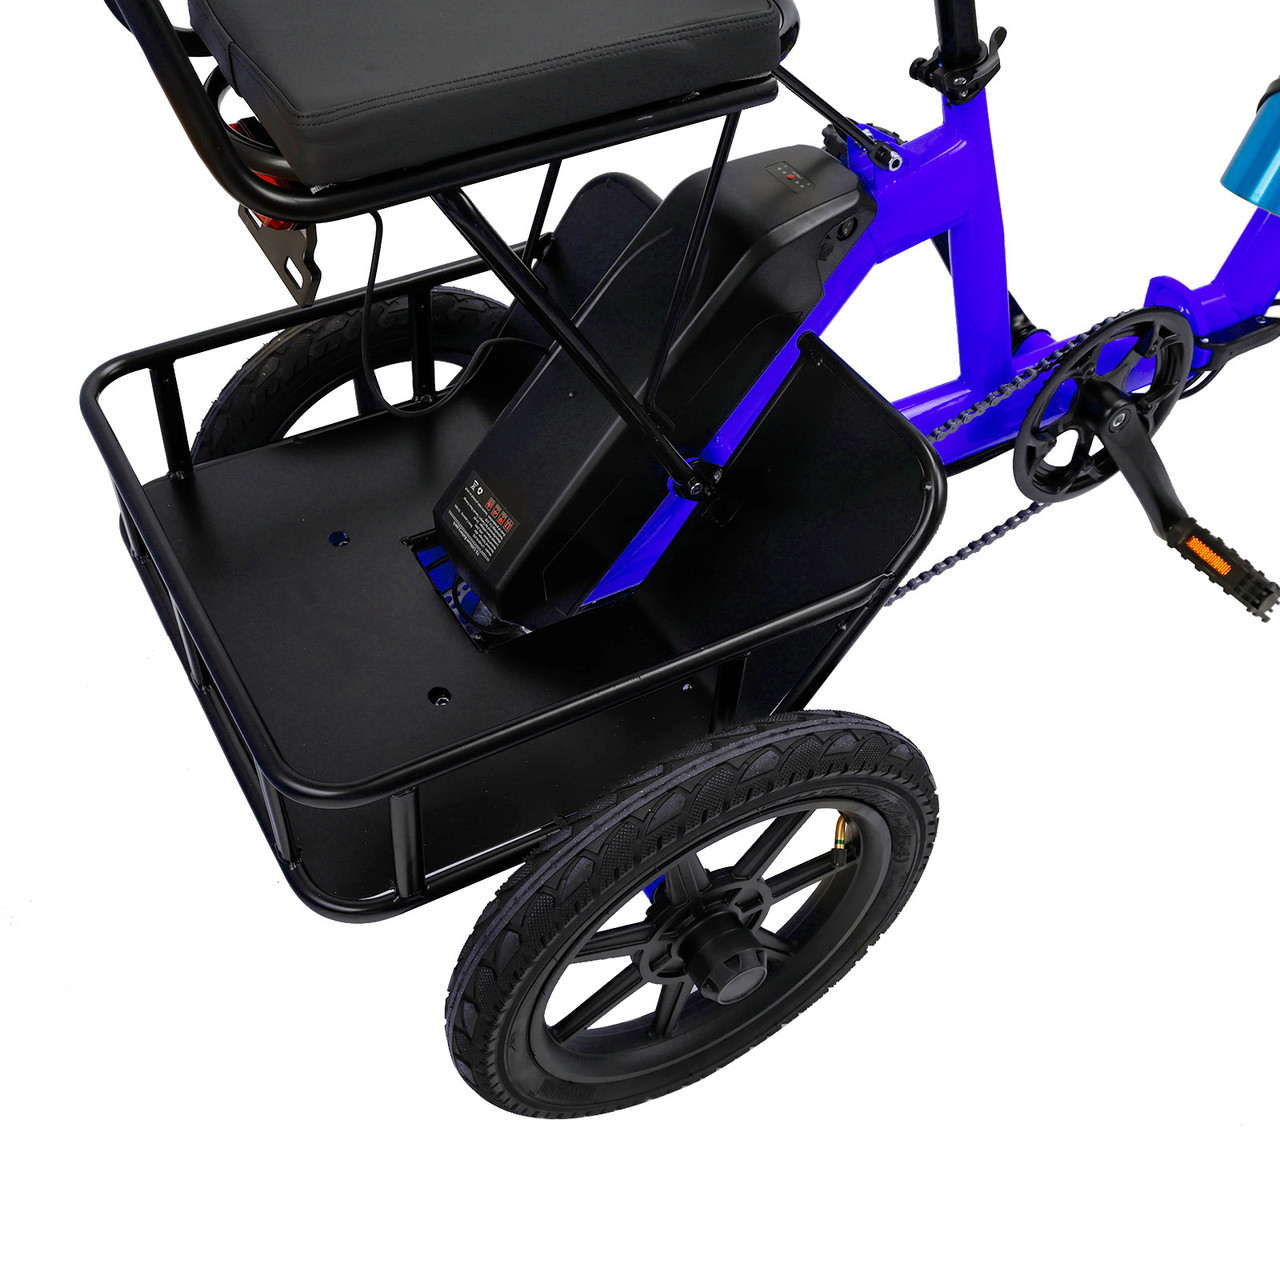 Three Wheel Electric Tricycle for Adults 3 Wheel Motorized Folding E-Bike Blue